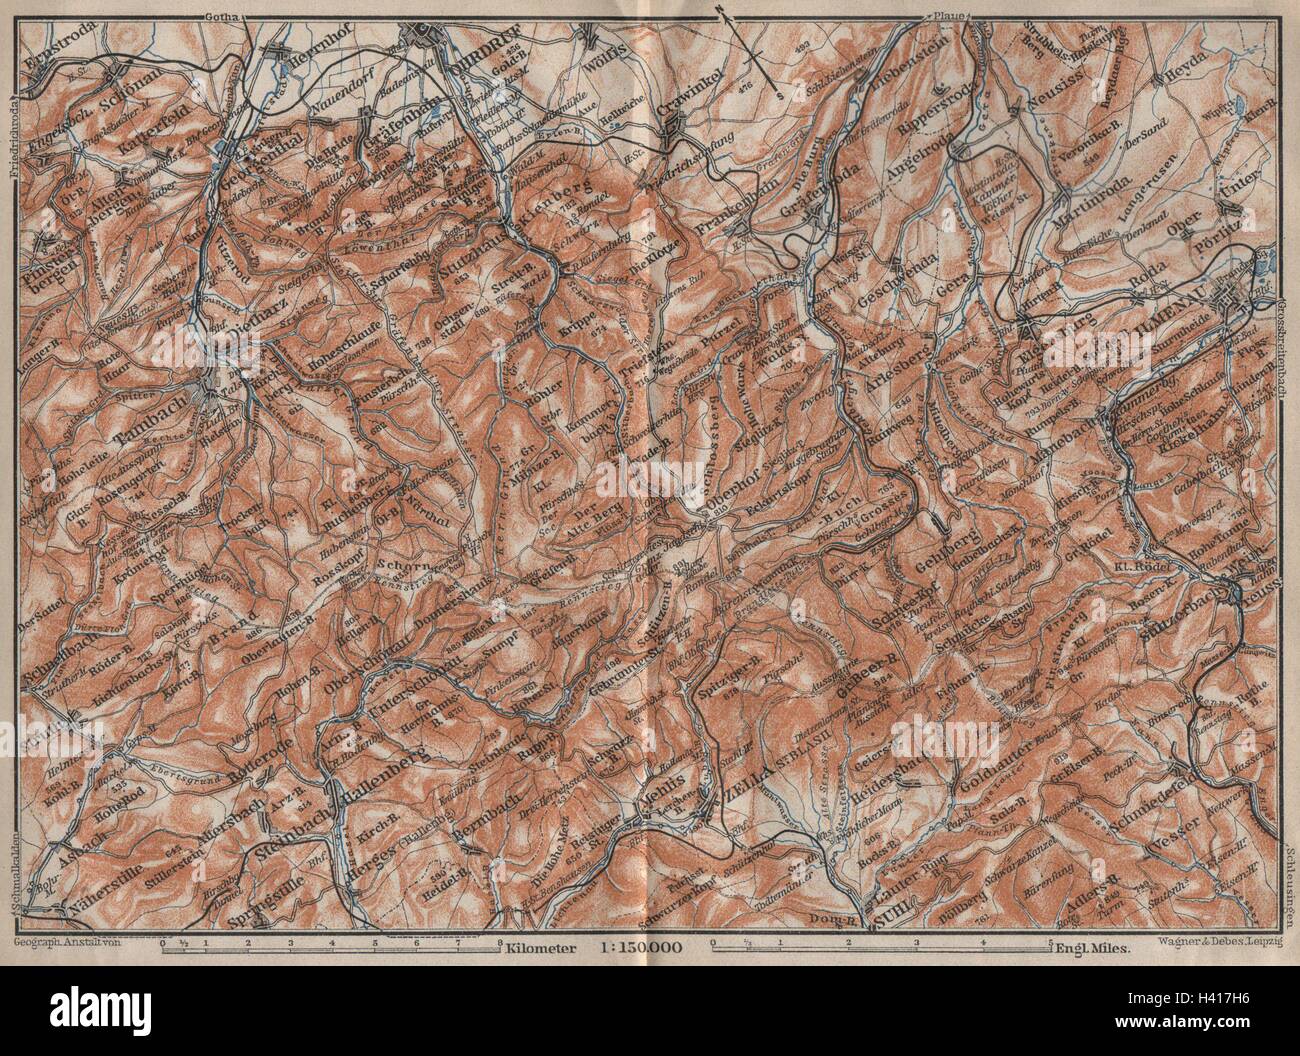 Maps - Juno, the Capital of Schwarzwald Republic